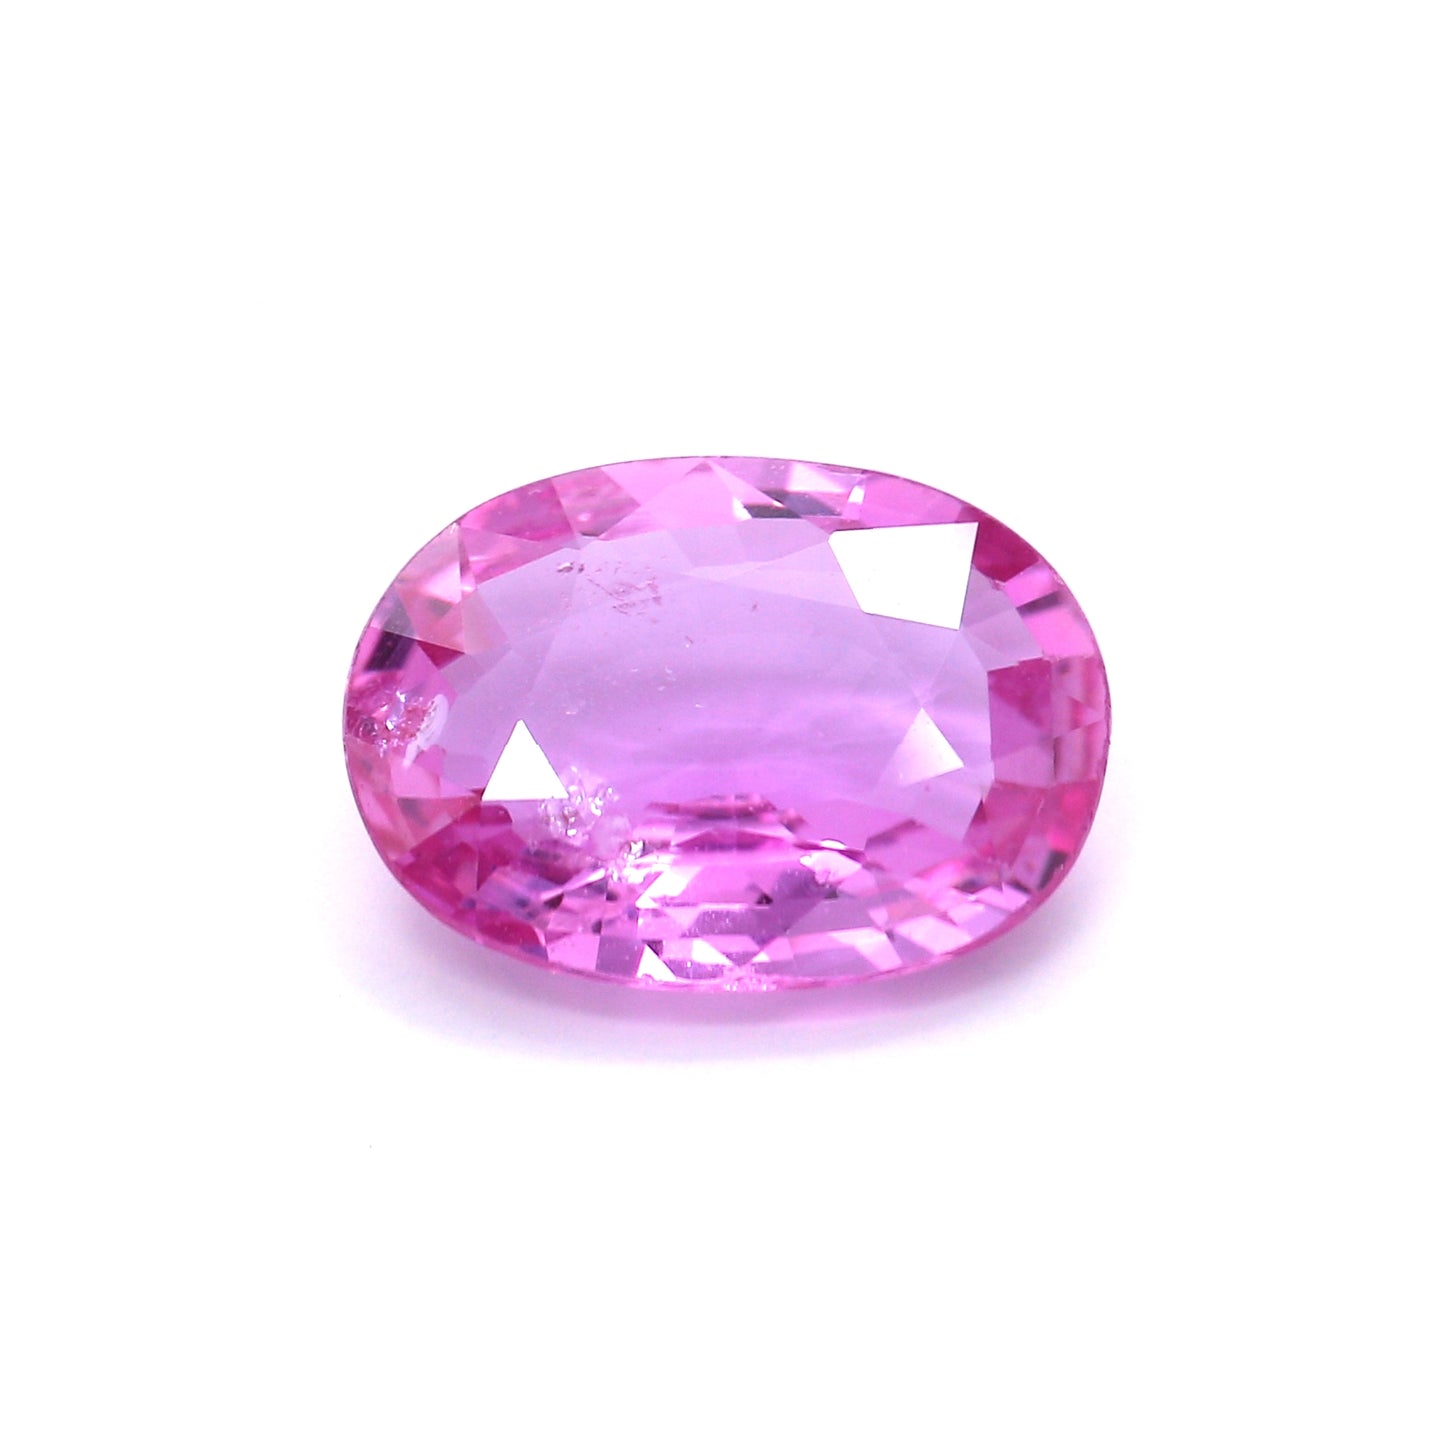 2.48ct Pink, Oval Sapphire, Heated, Madagascar - 10.44 x 7.61 x 3.36mm